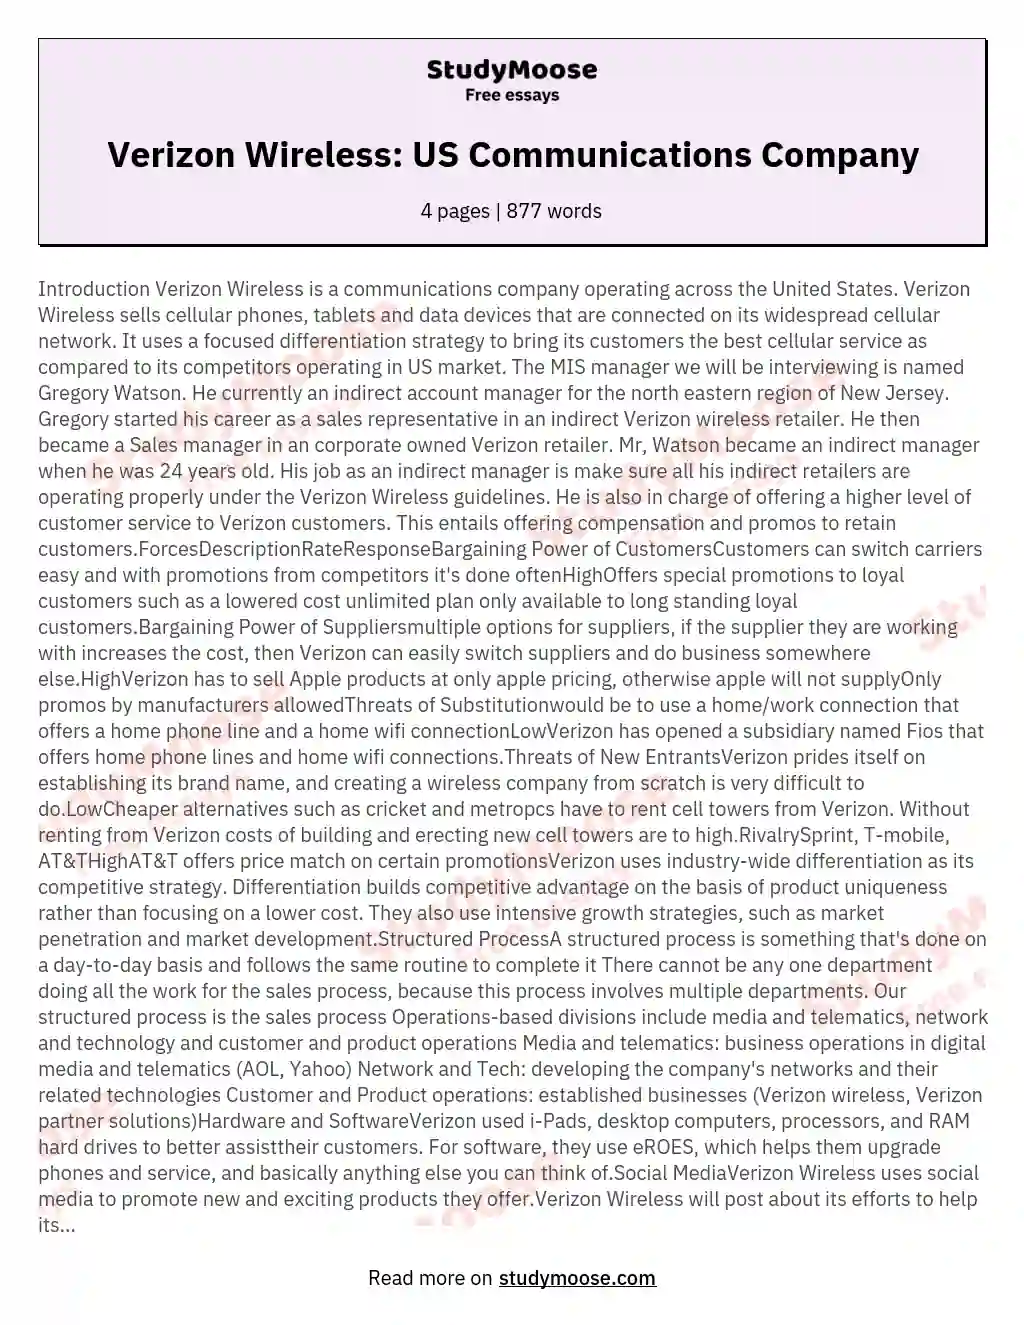 Verizon Wireless: US Communications Company essay